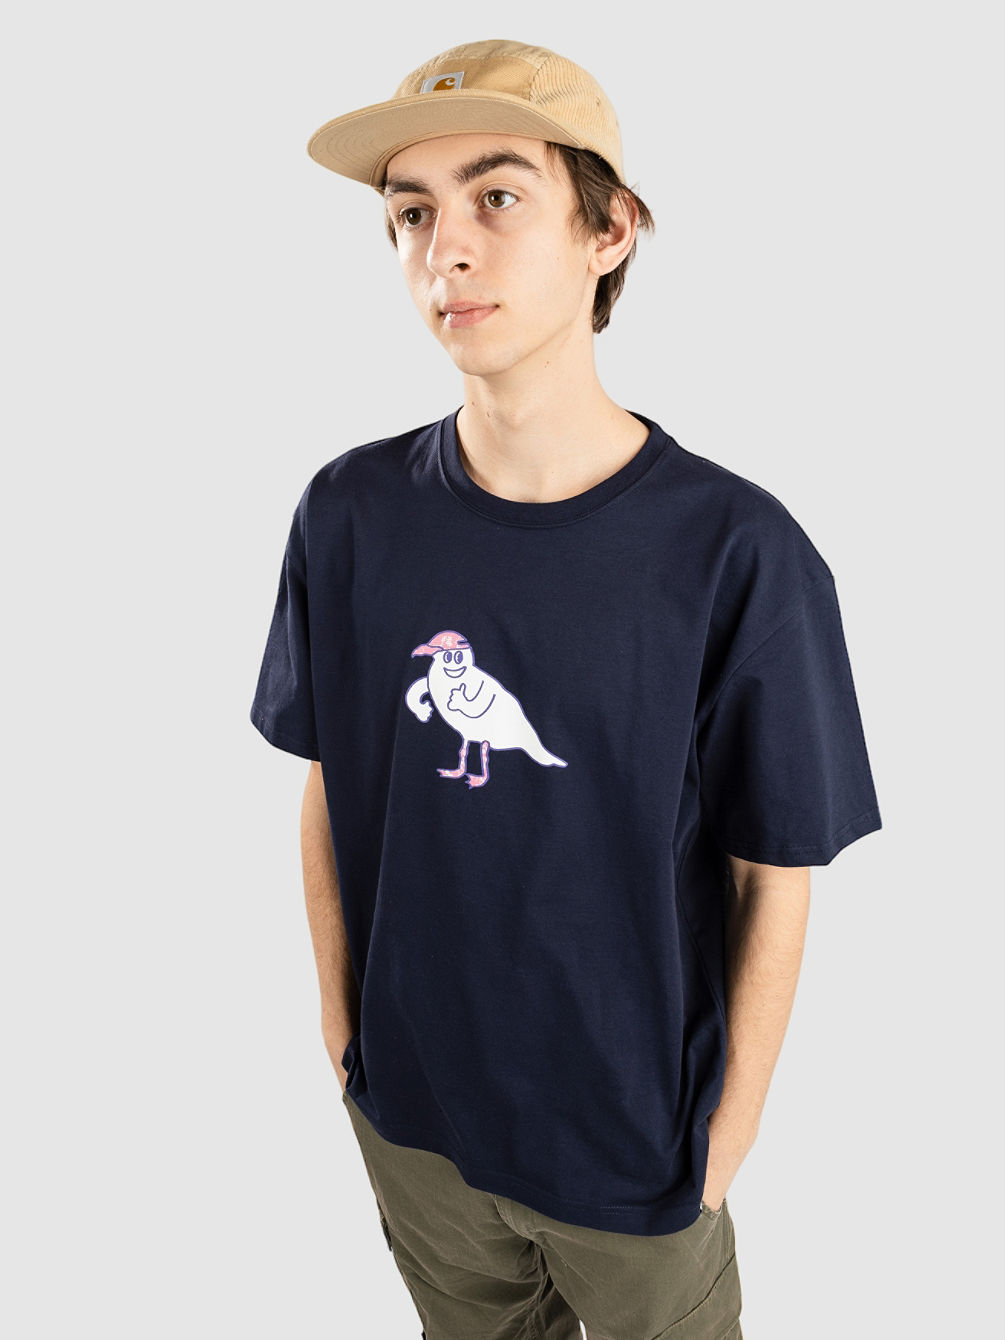 Gull Cap T-Shirt